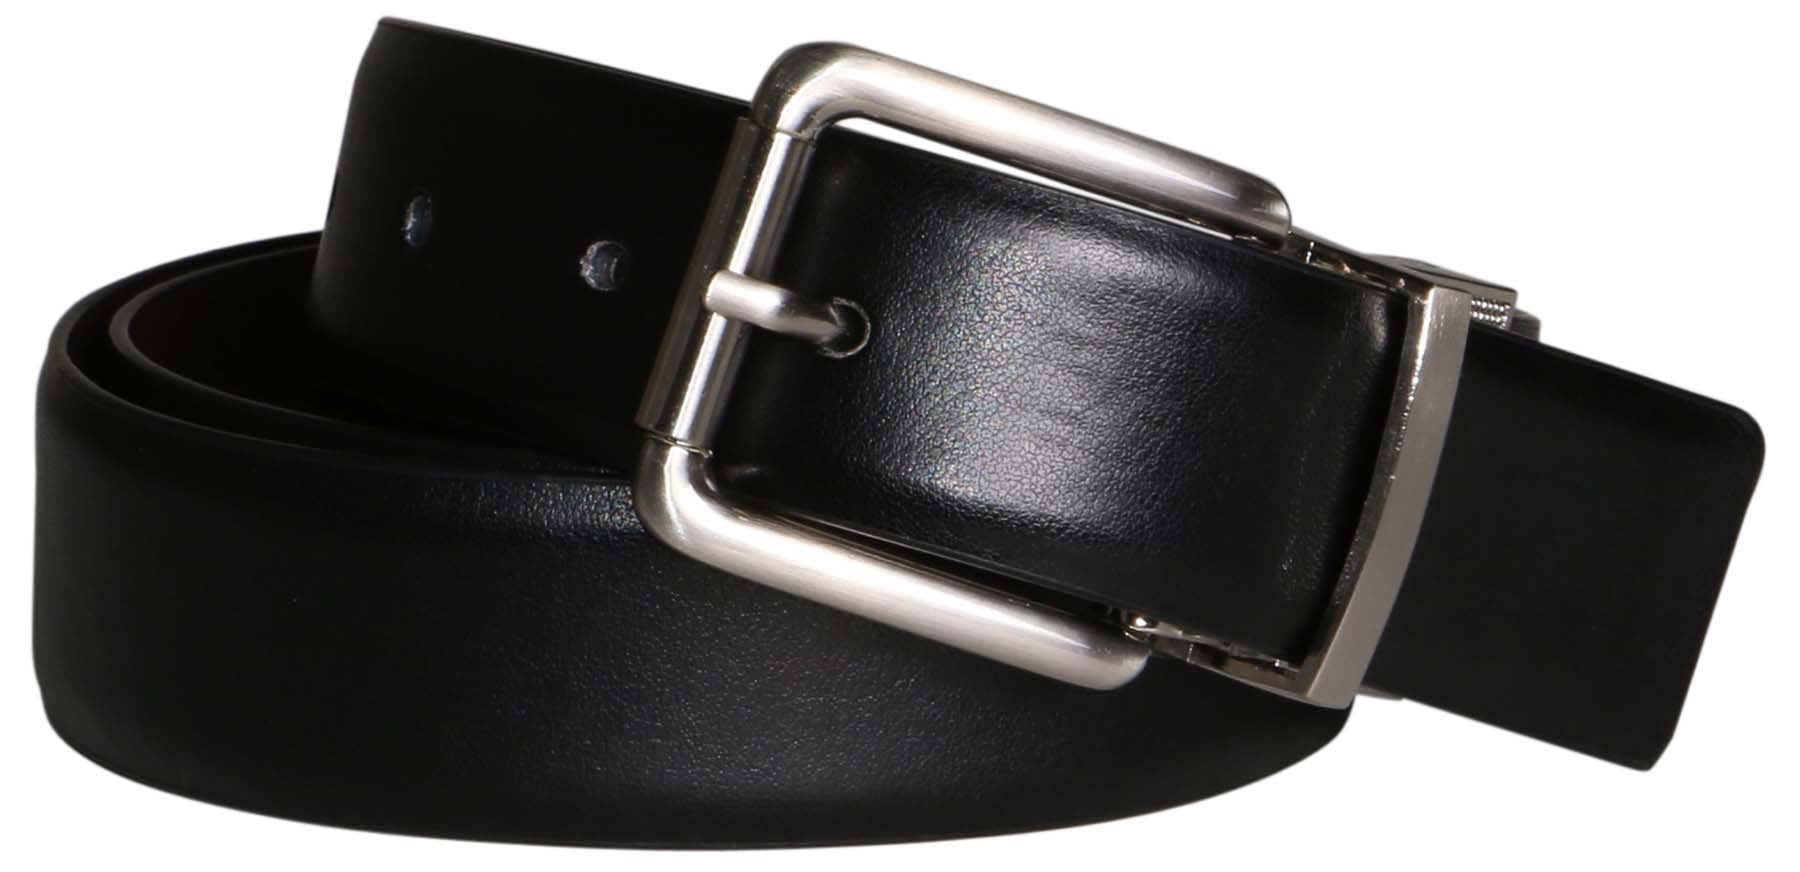 Millennial Belt Set - Black and Black Stitched Casual Belt Set 36 inch / Black / Zinc Alloy/Leather